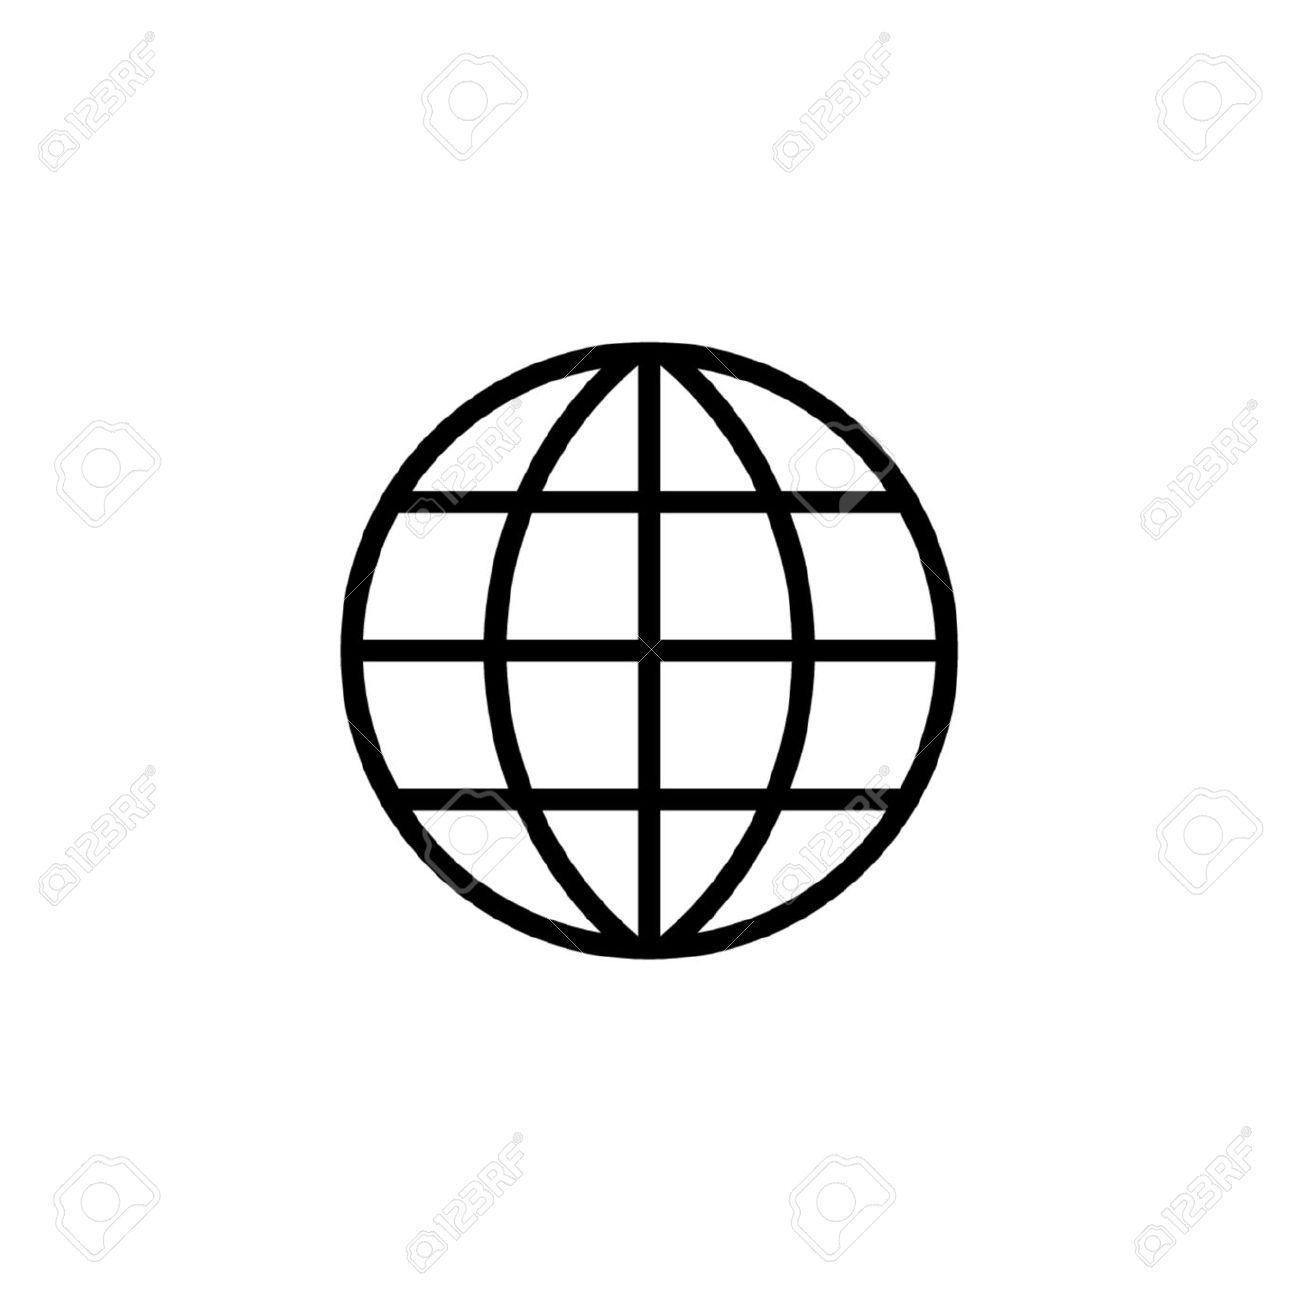 Black and White Globe Logo - 77+ Black And White Globe Logo - Globe Vectors Photos And PSD Files ...